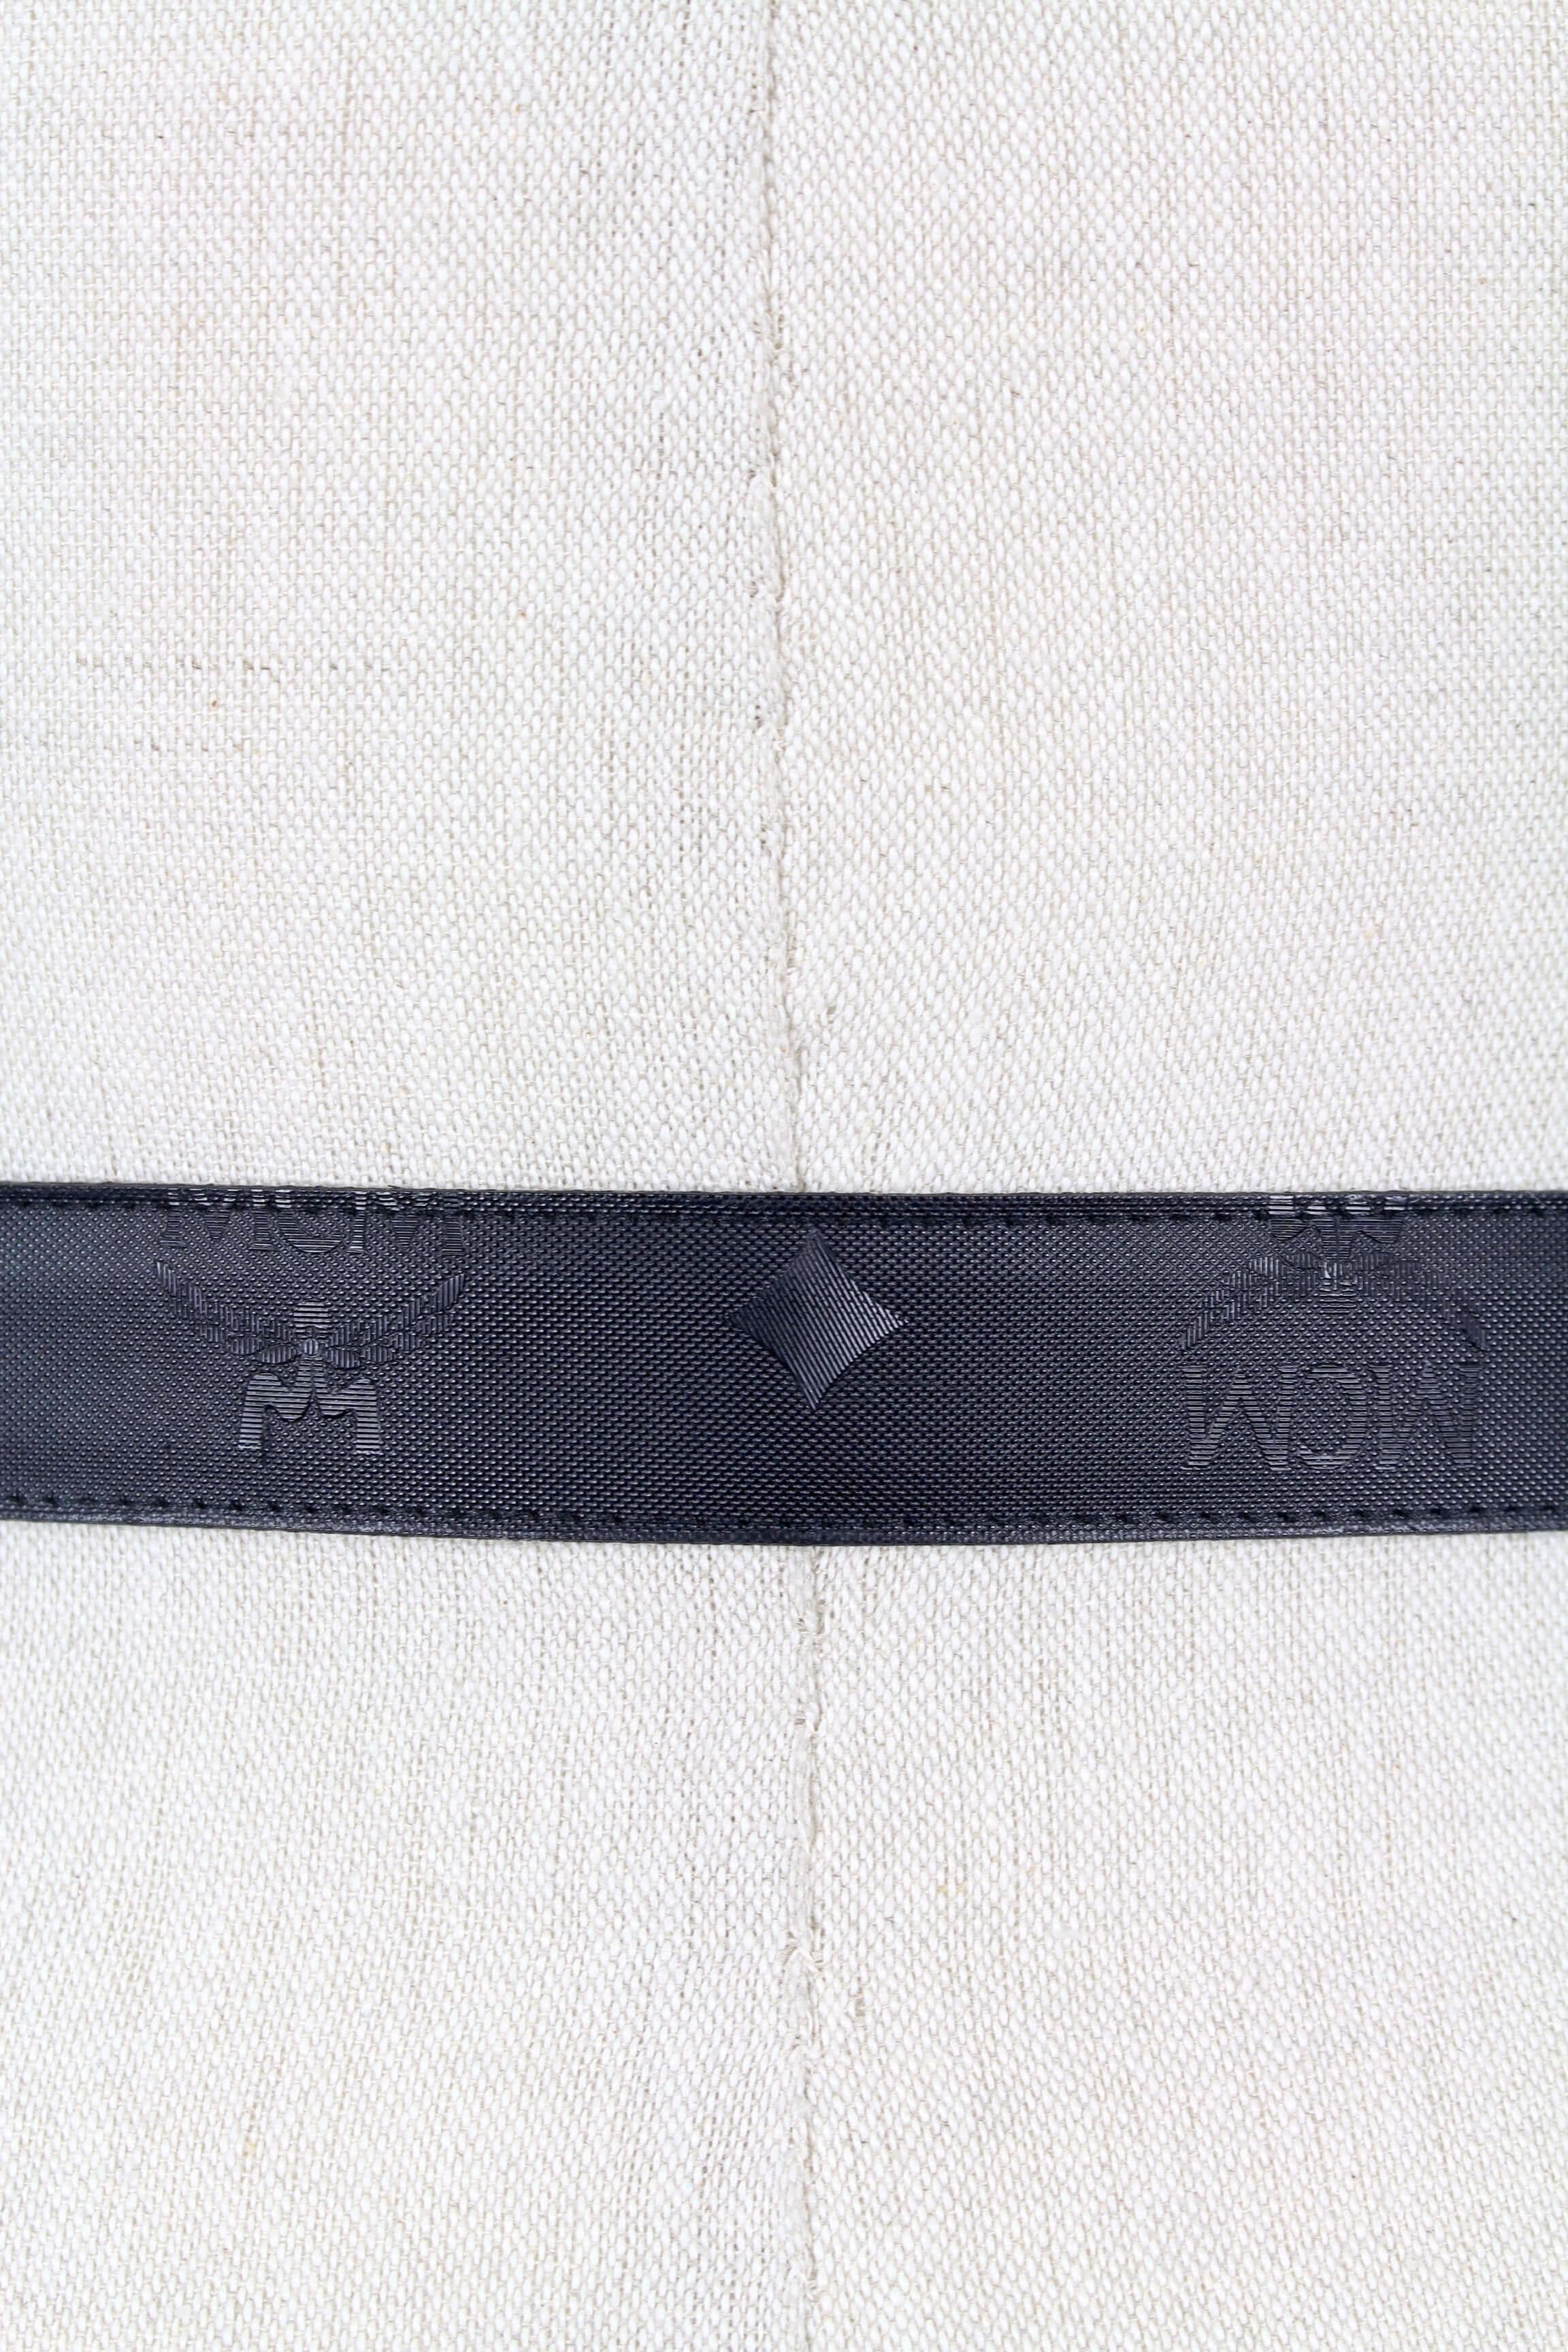 MCM Black Visetos Monogram Belt With Gold-Plated Logo Laurel Buckle Size S In Excellent Condition For Sale In Munich, DE